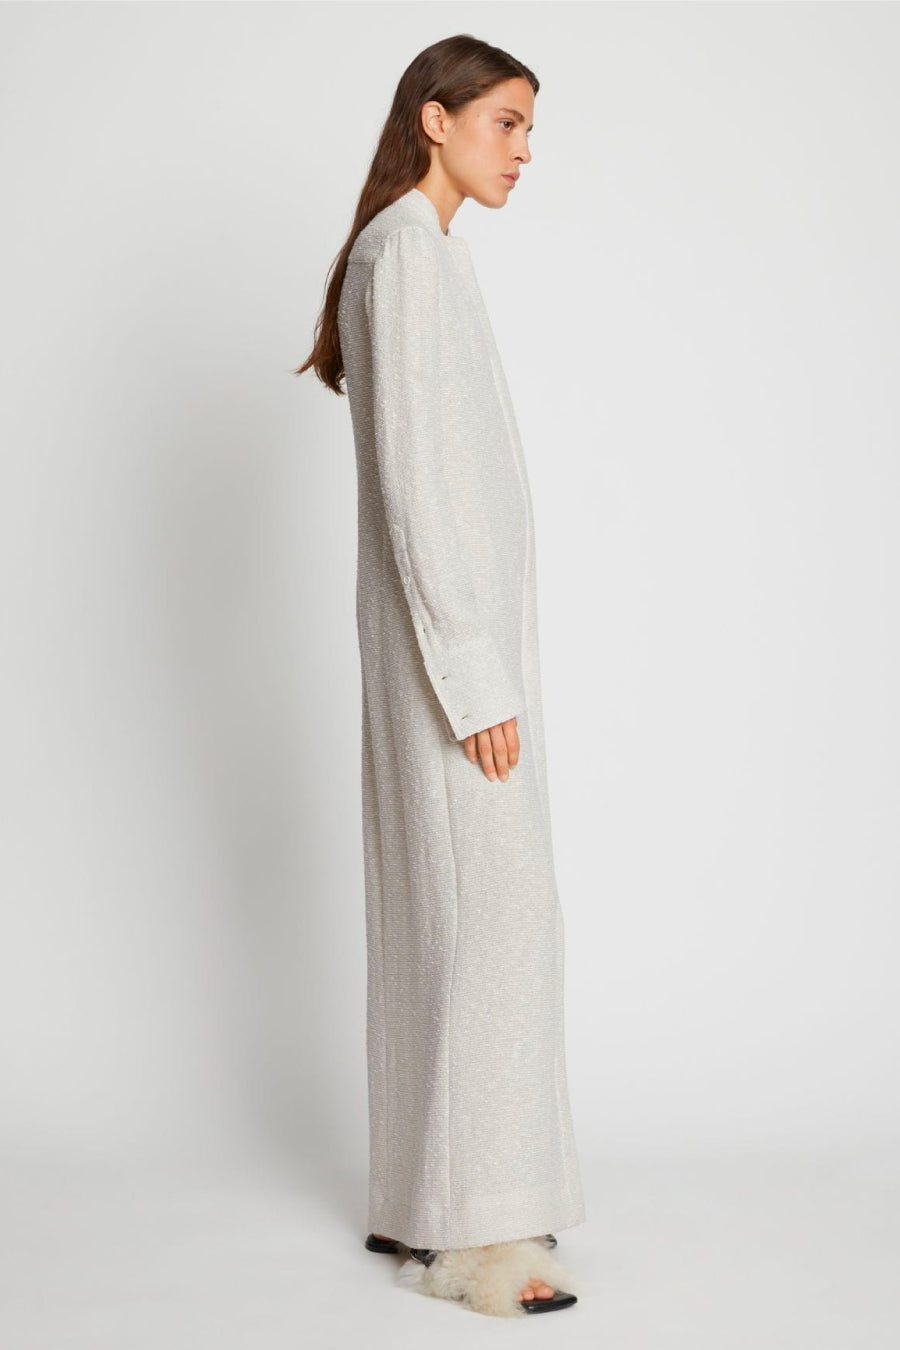 Proenza Schouler Lightweight Tweed Chiffon Dress - Ecru